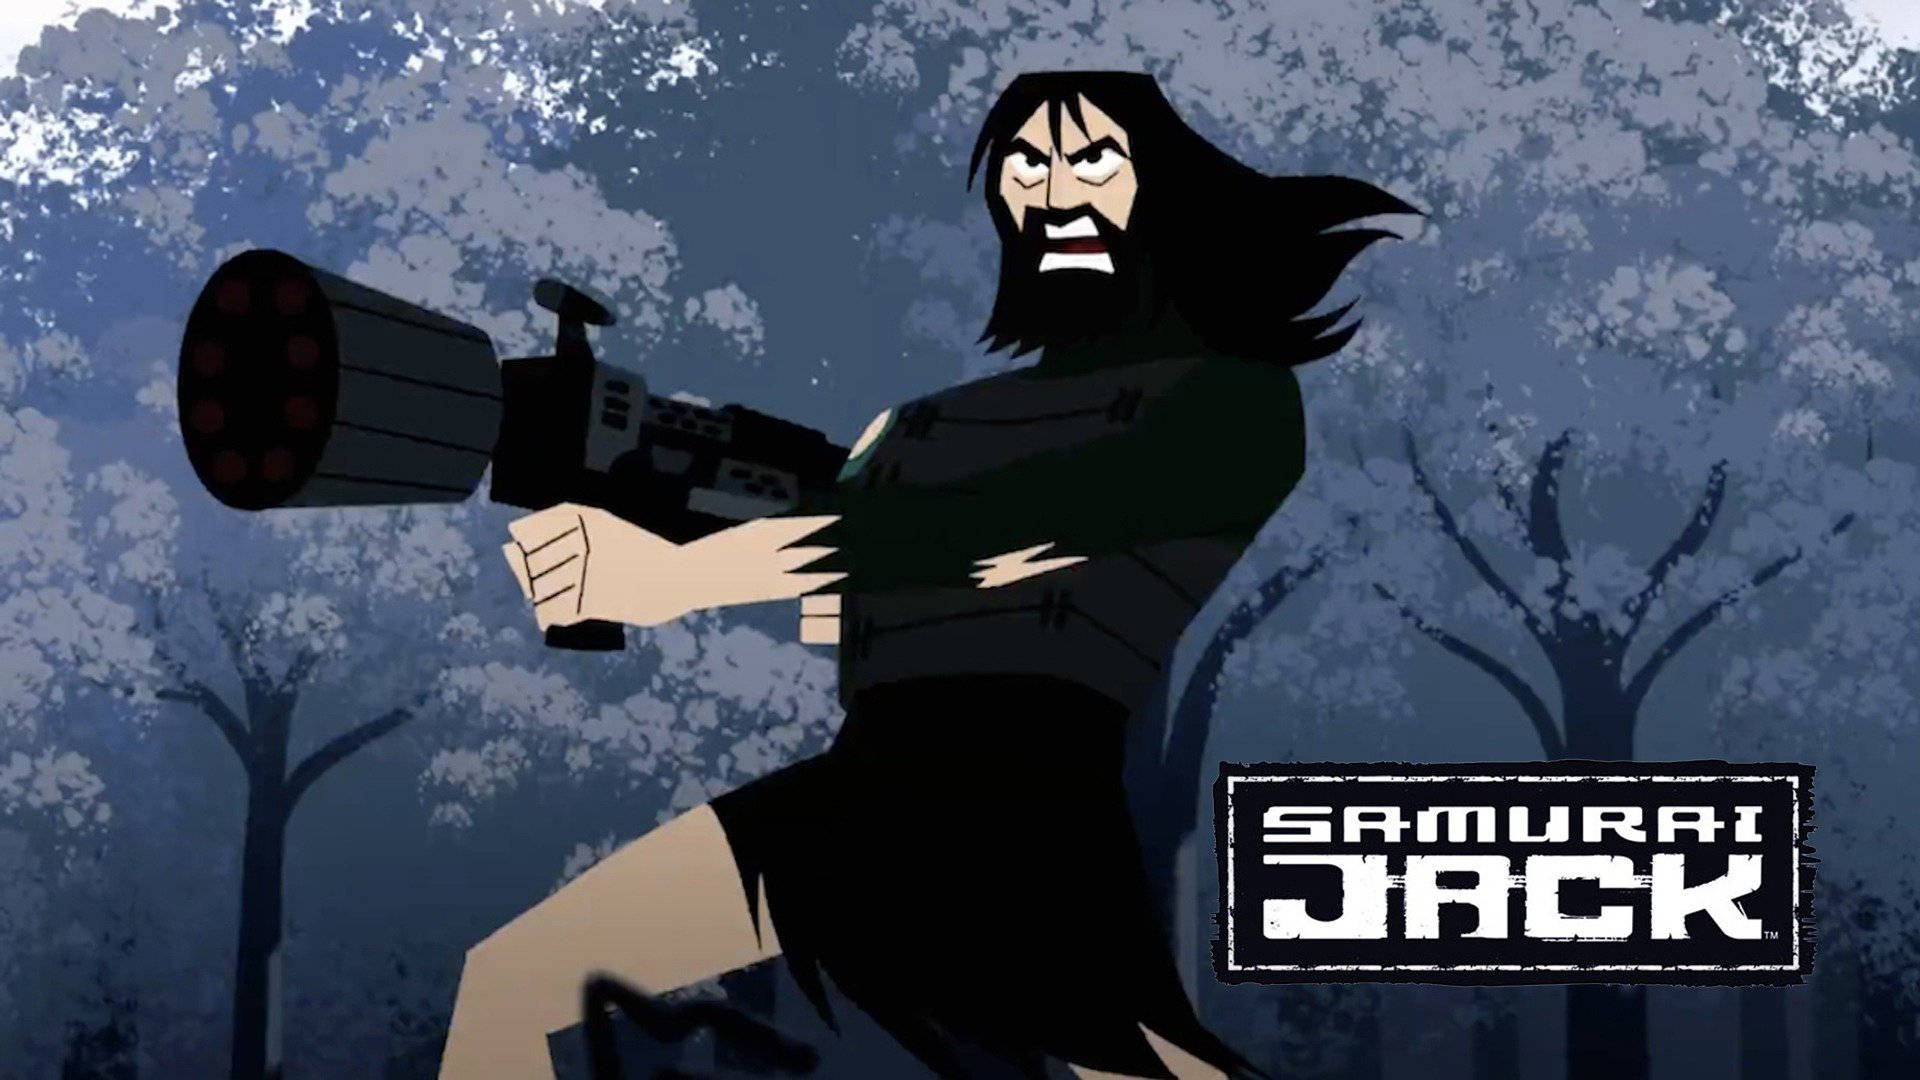 Samurai Jack With Weapon Desktop Picture